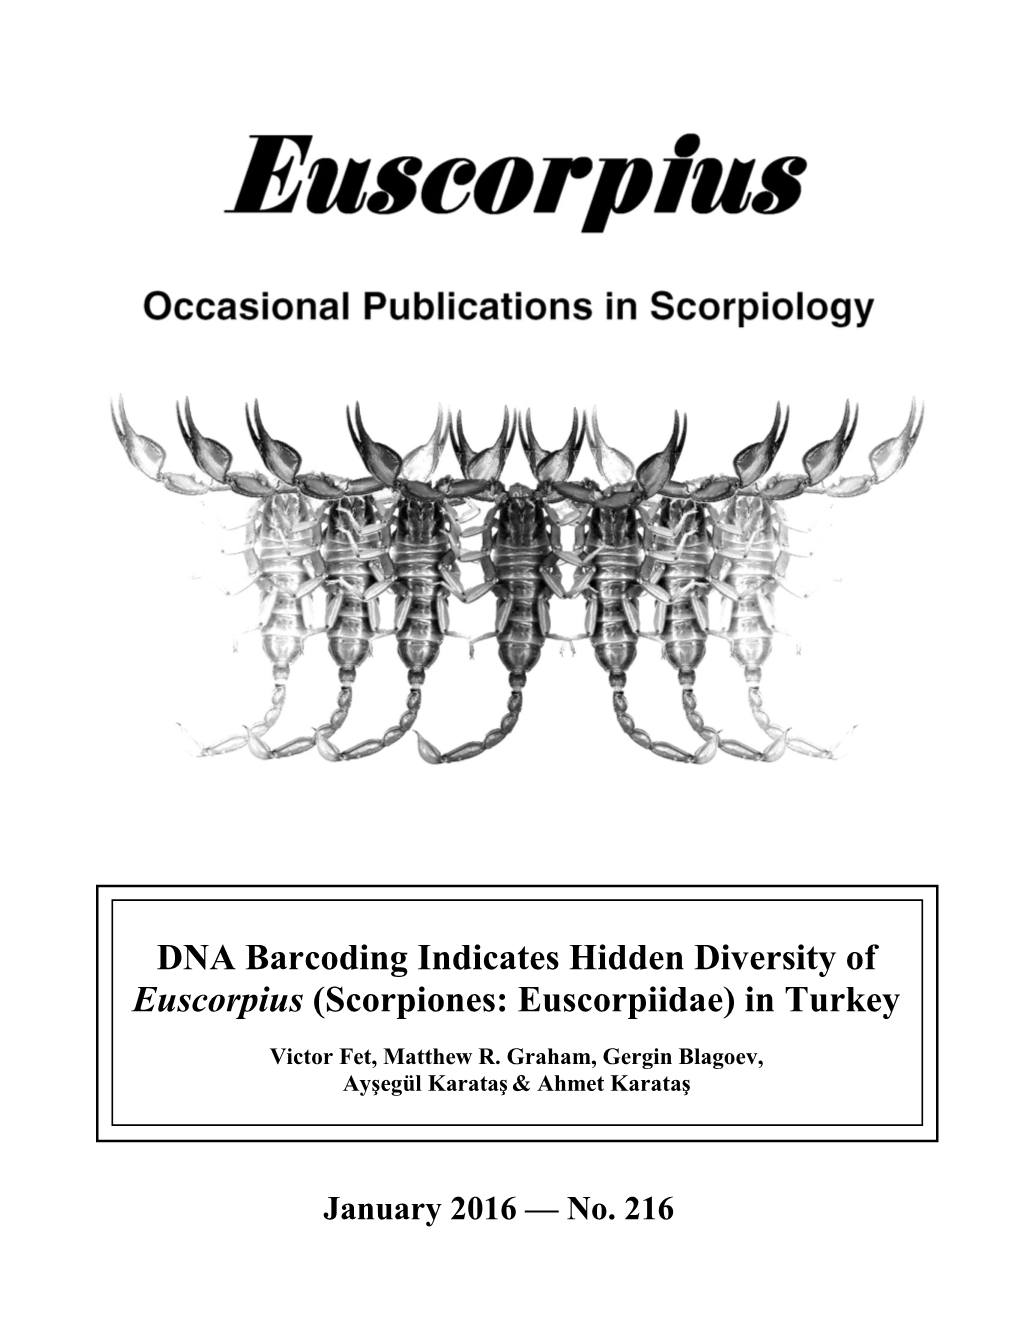 DNA Barcoding Indicates Hidden Diversity of Euscorpius (Scorpiones: Euscorpiidae) in Turkey